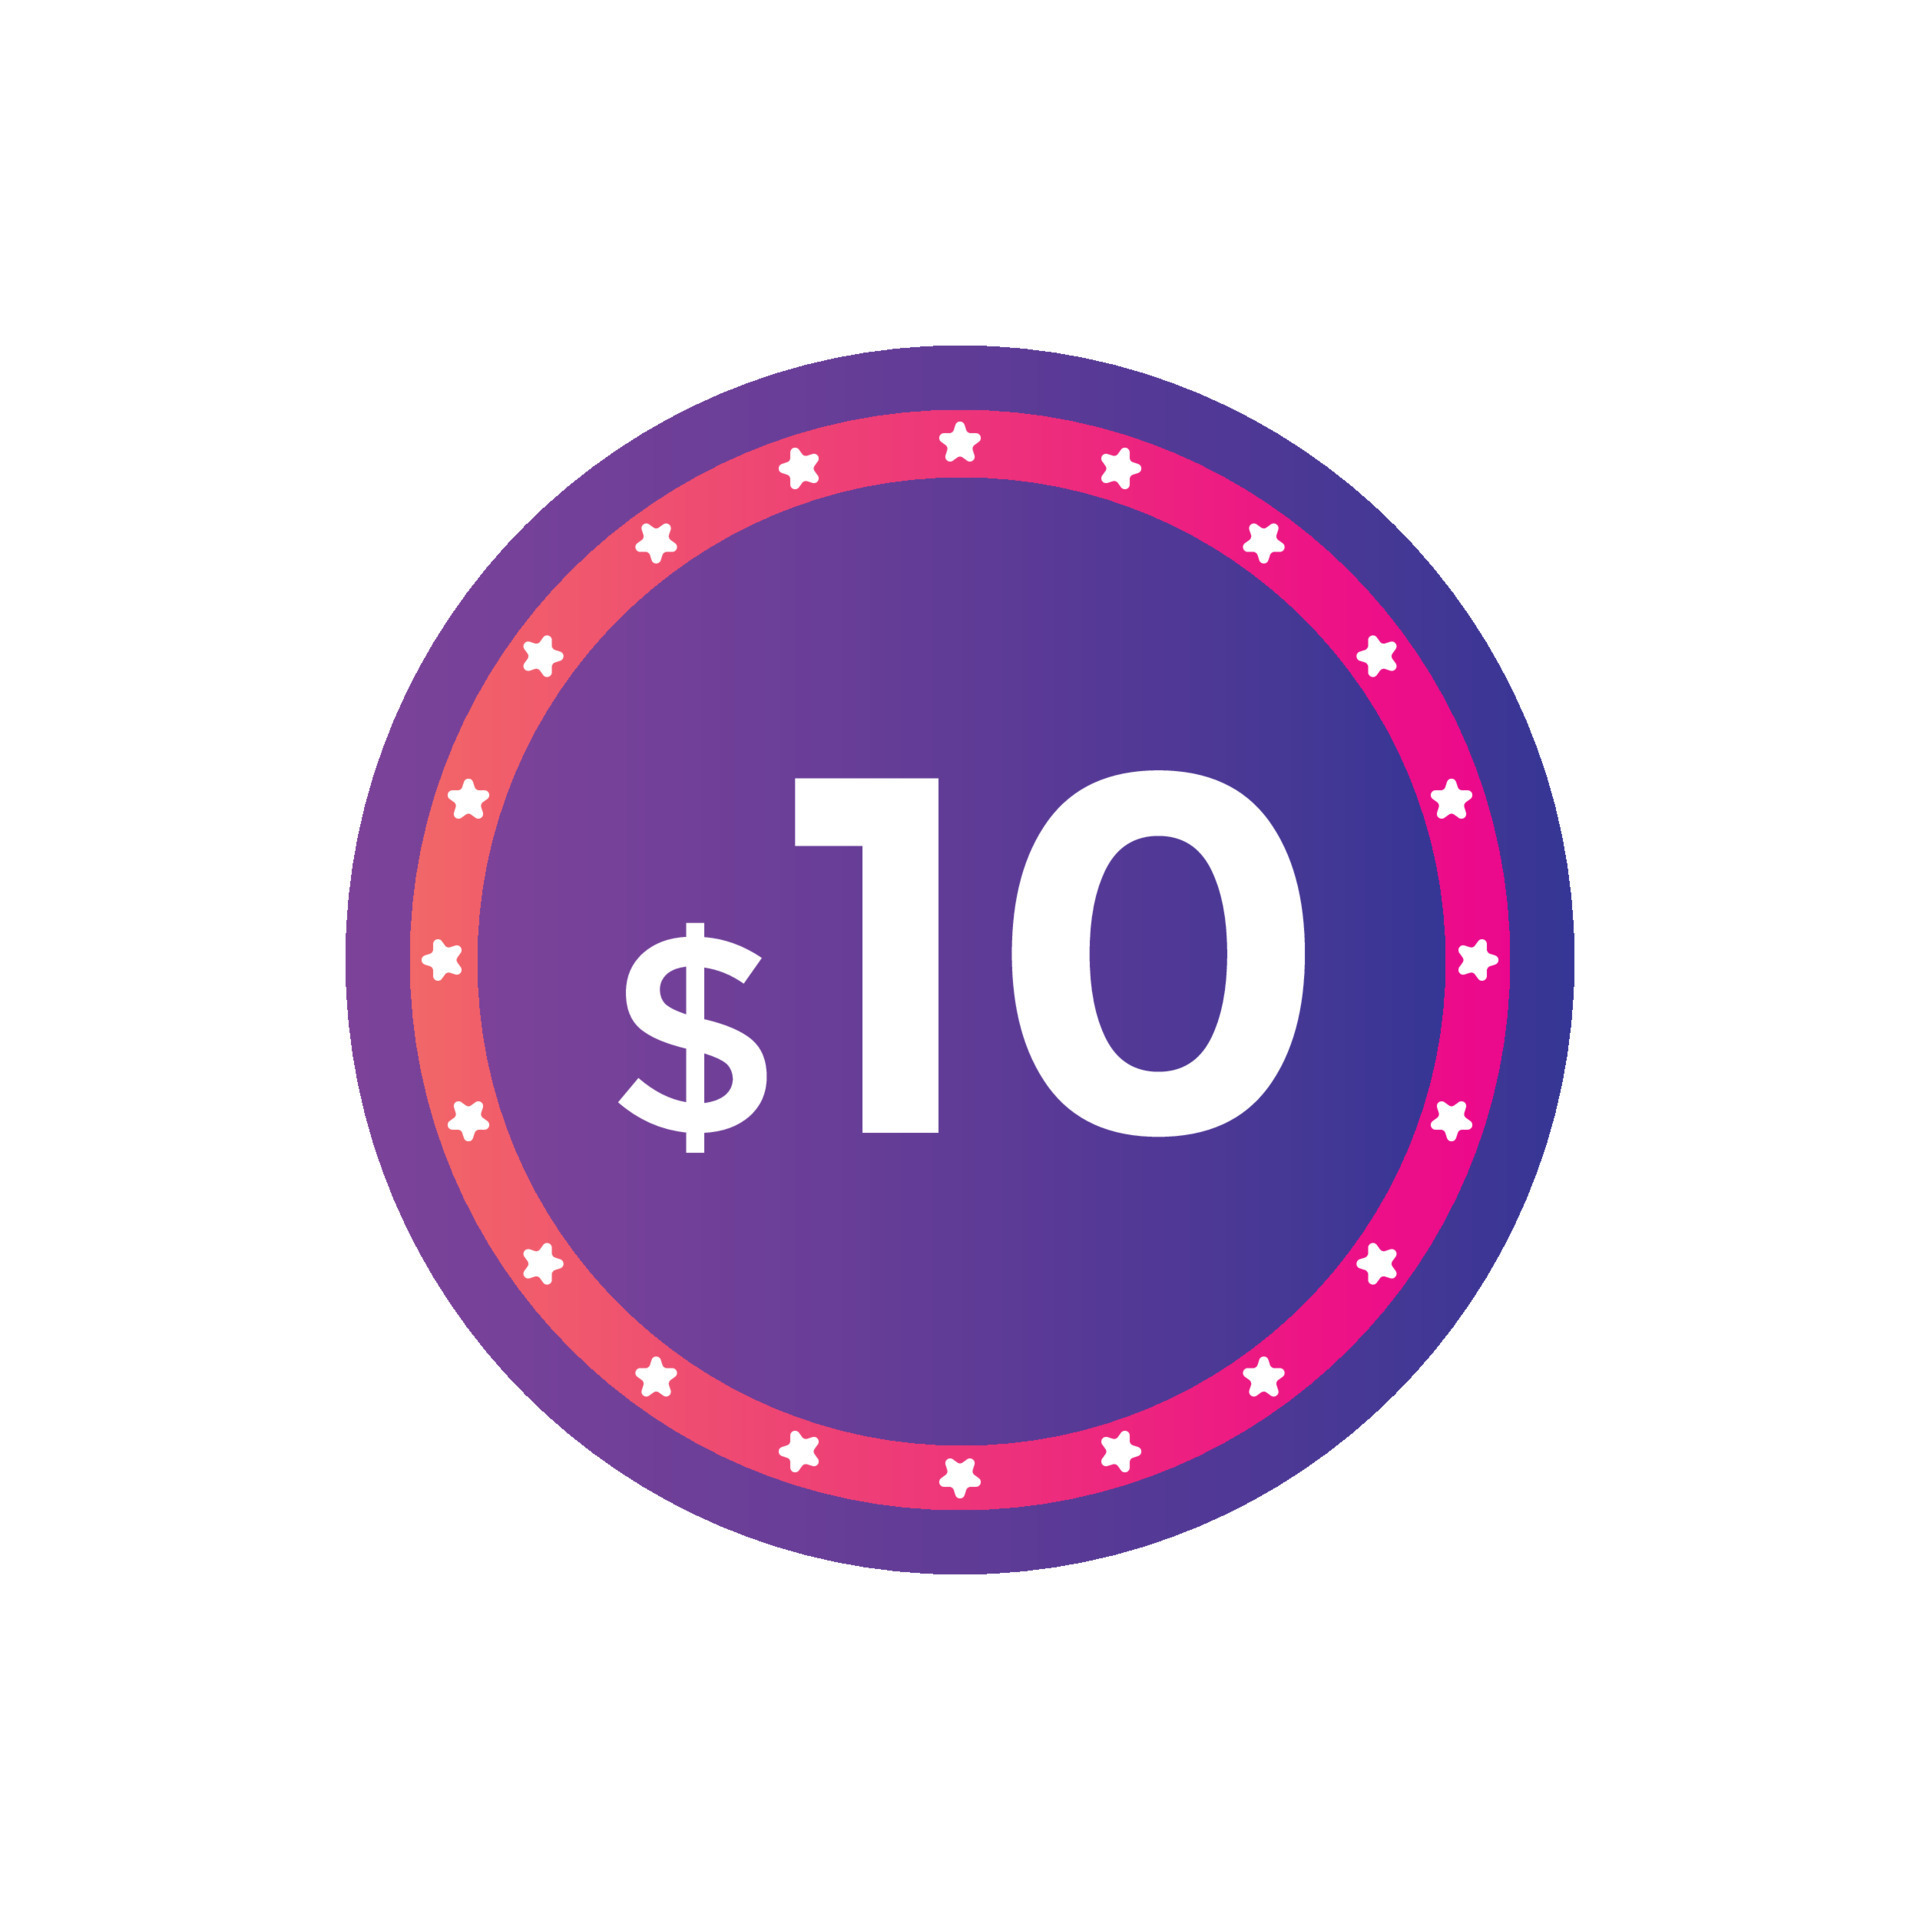 $10 Dollar Price Icon. 10 USD Price Tag Stock Vector